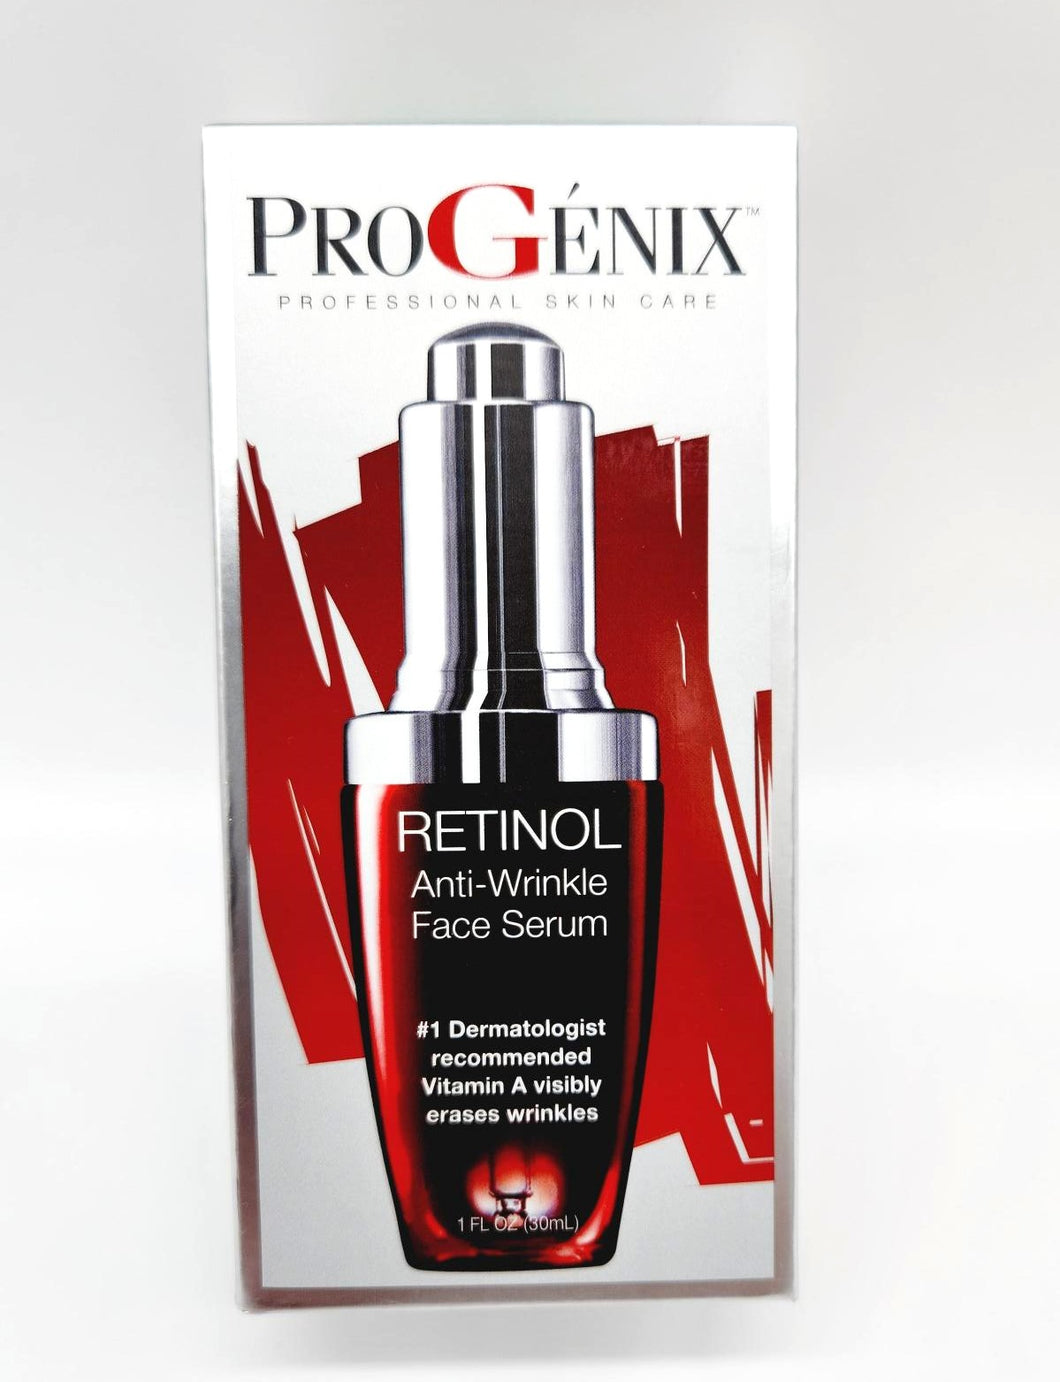 Progenix Retinol Anti-Wrinkle Face Serum